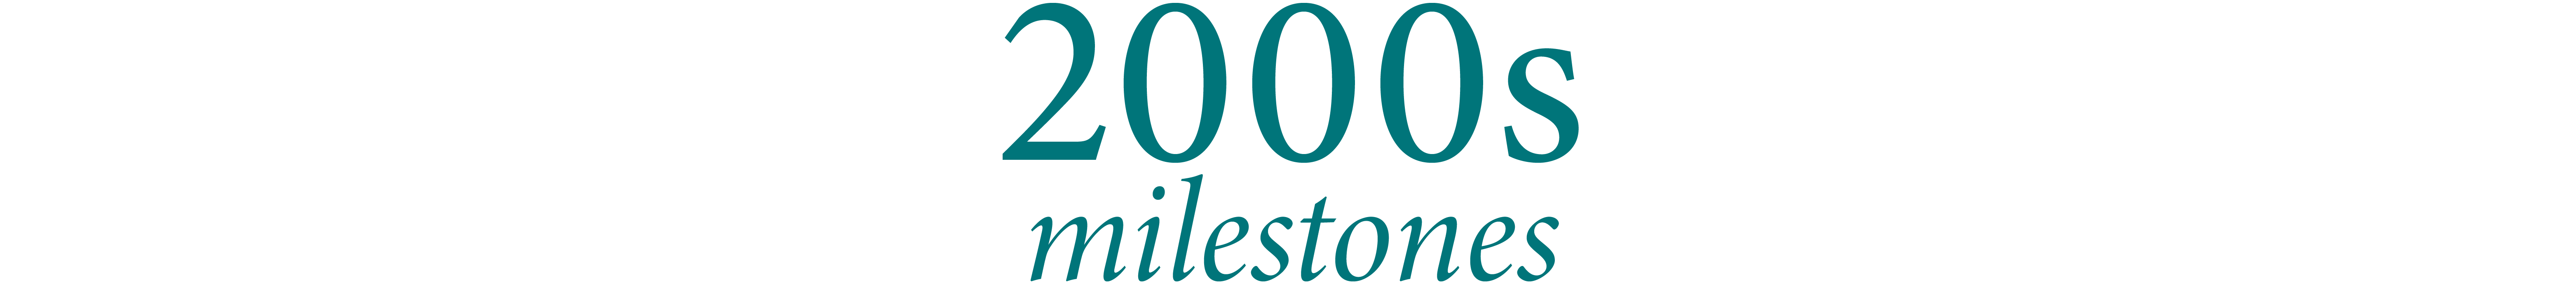 2000s milestones banner